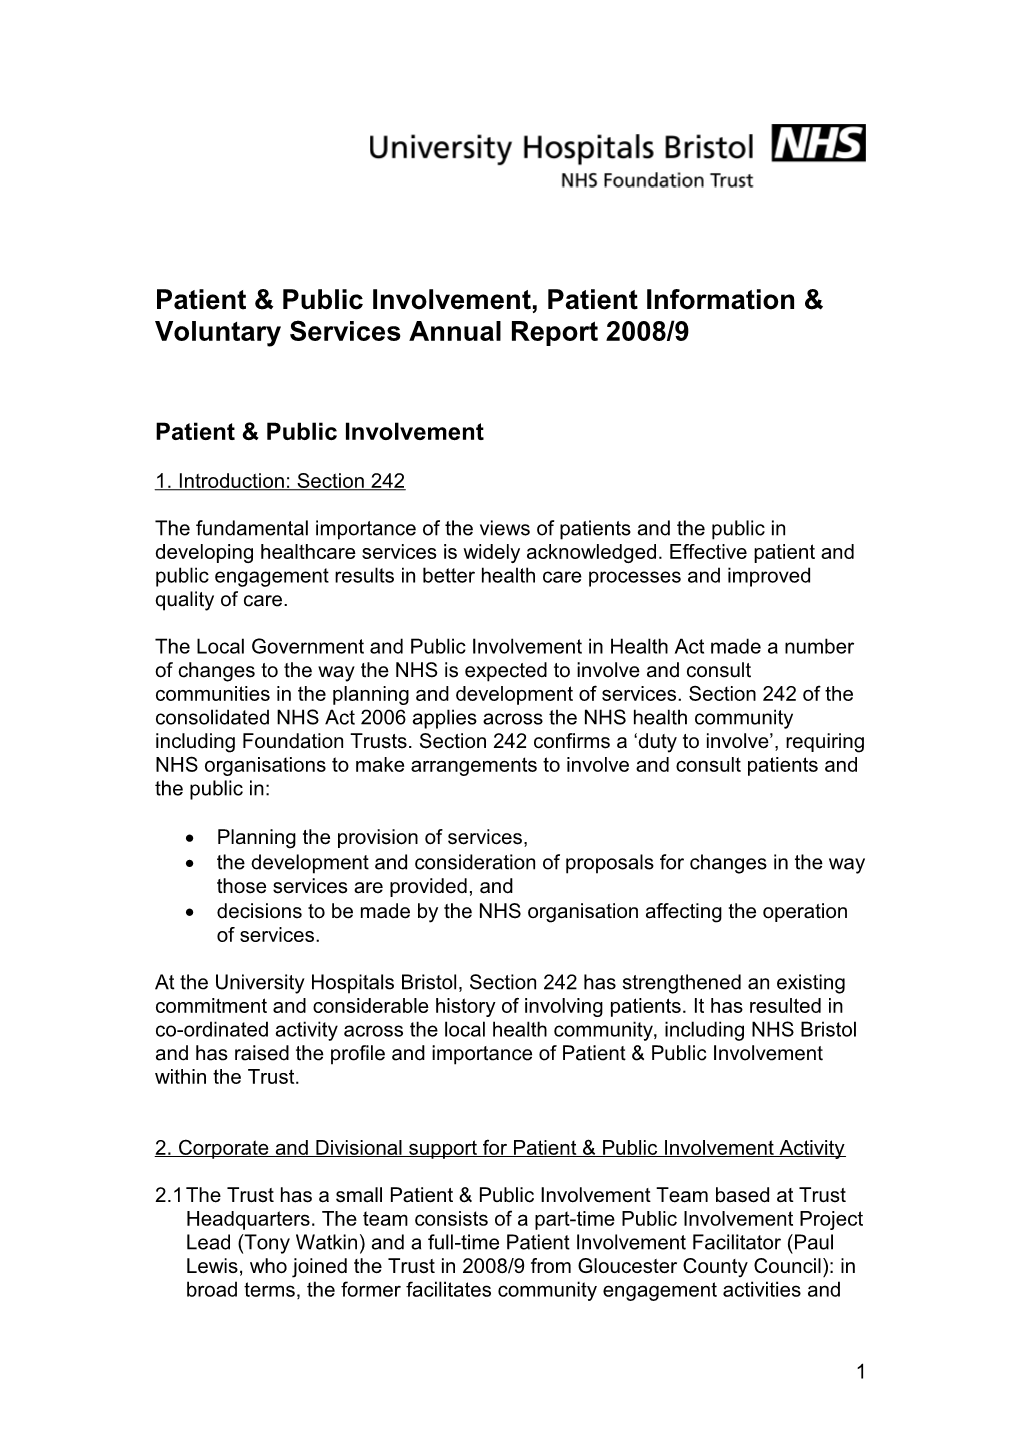 Patient & Public Involvement Annual Report 2008/9